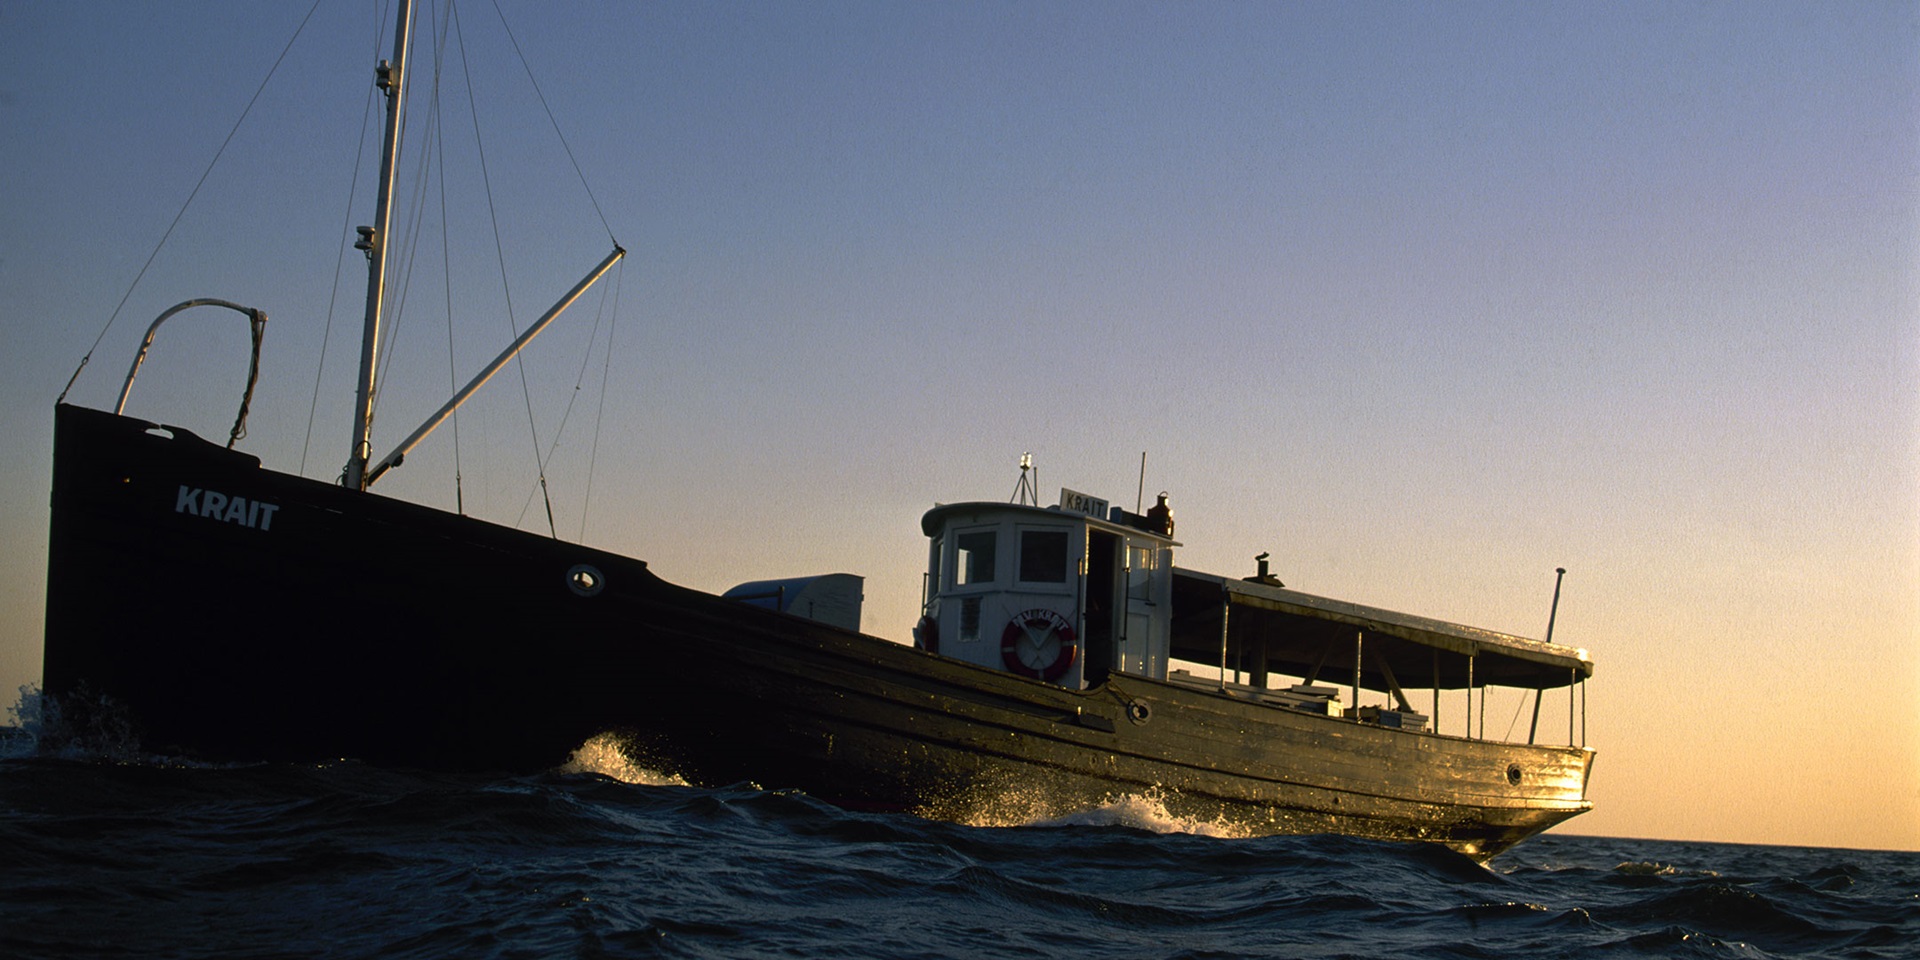 MV KRAIT, 1989. Photographer Victoria Fernandez (ANMM)